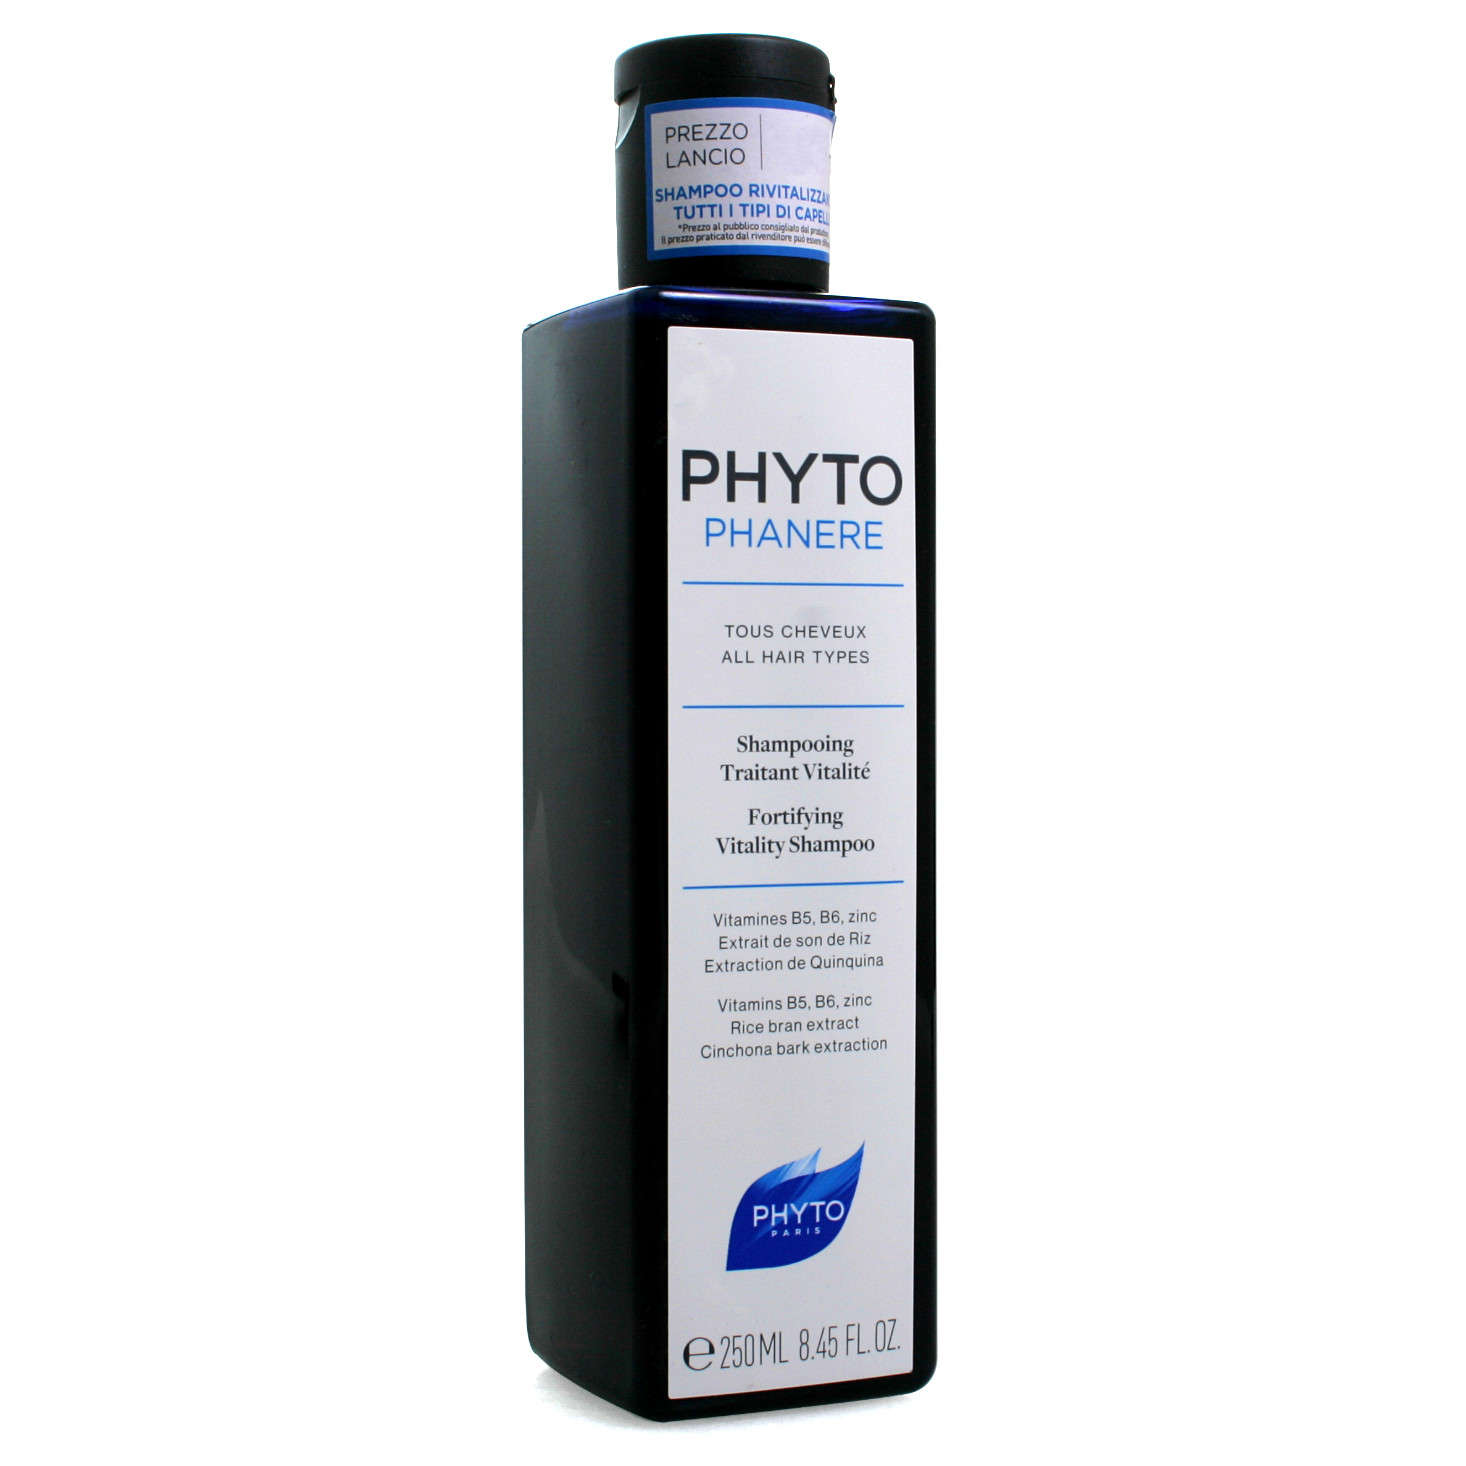 Phyto Paris - Phytophanere